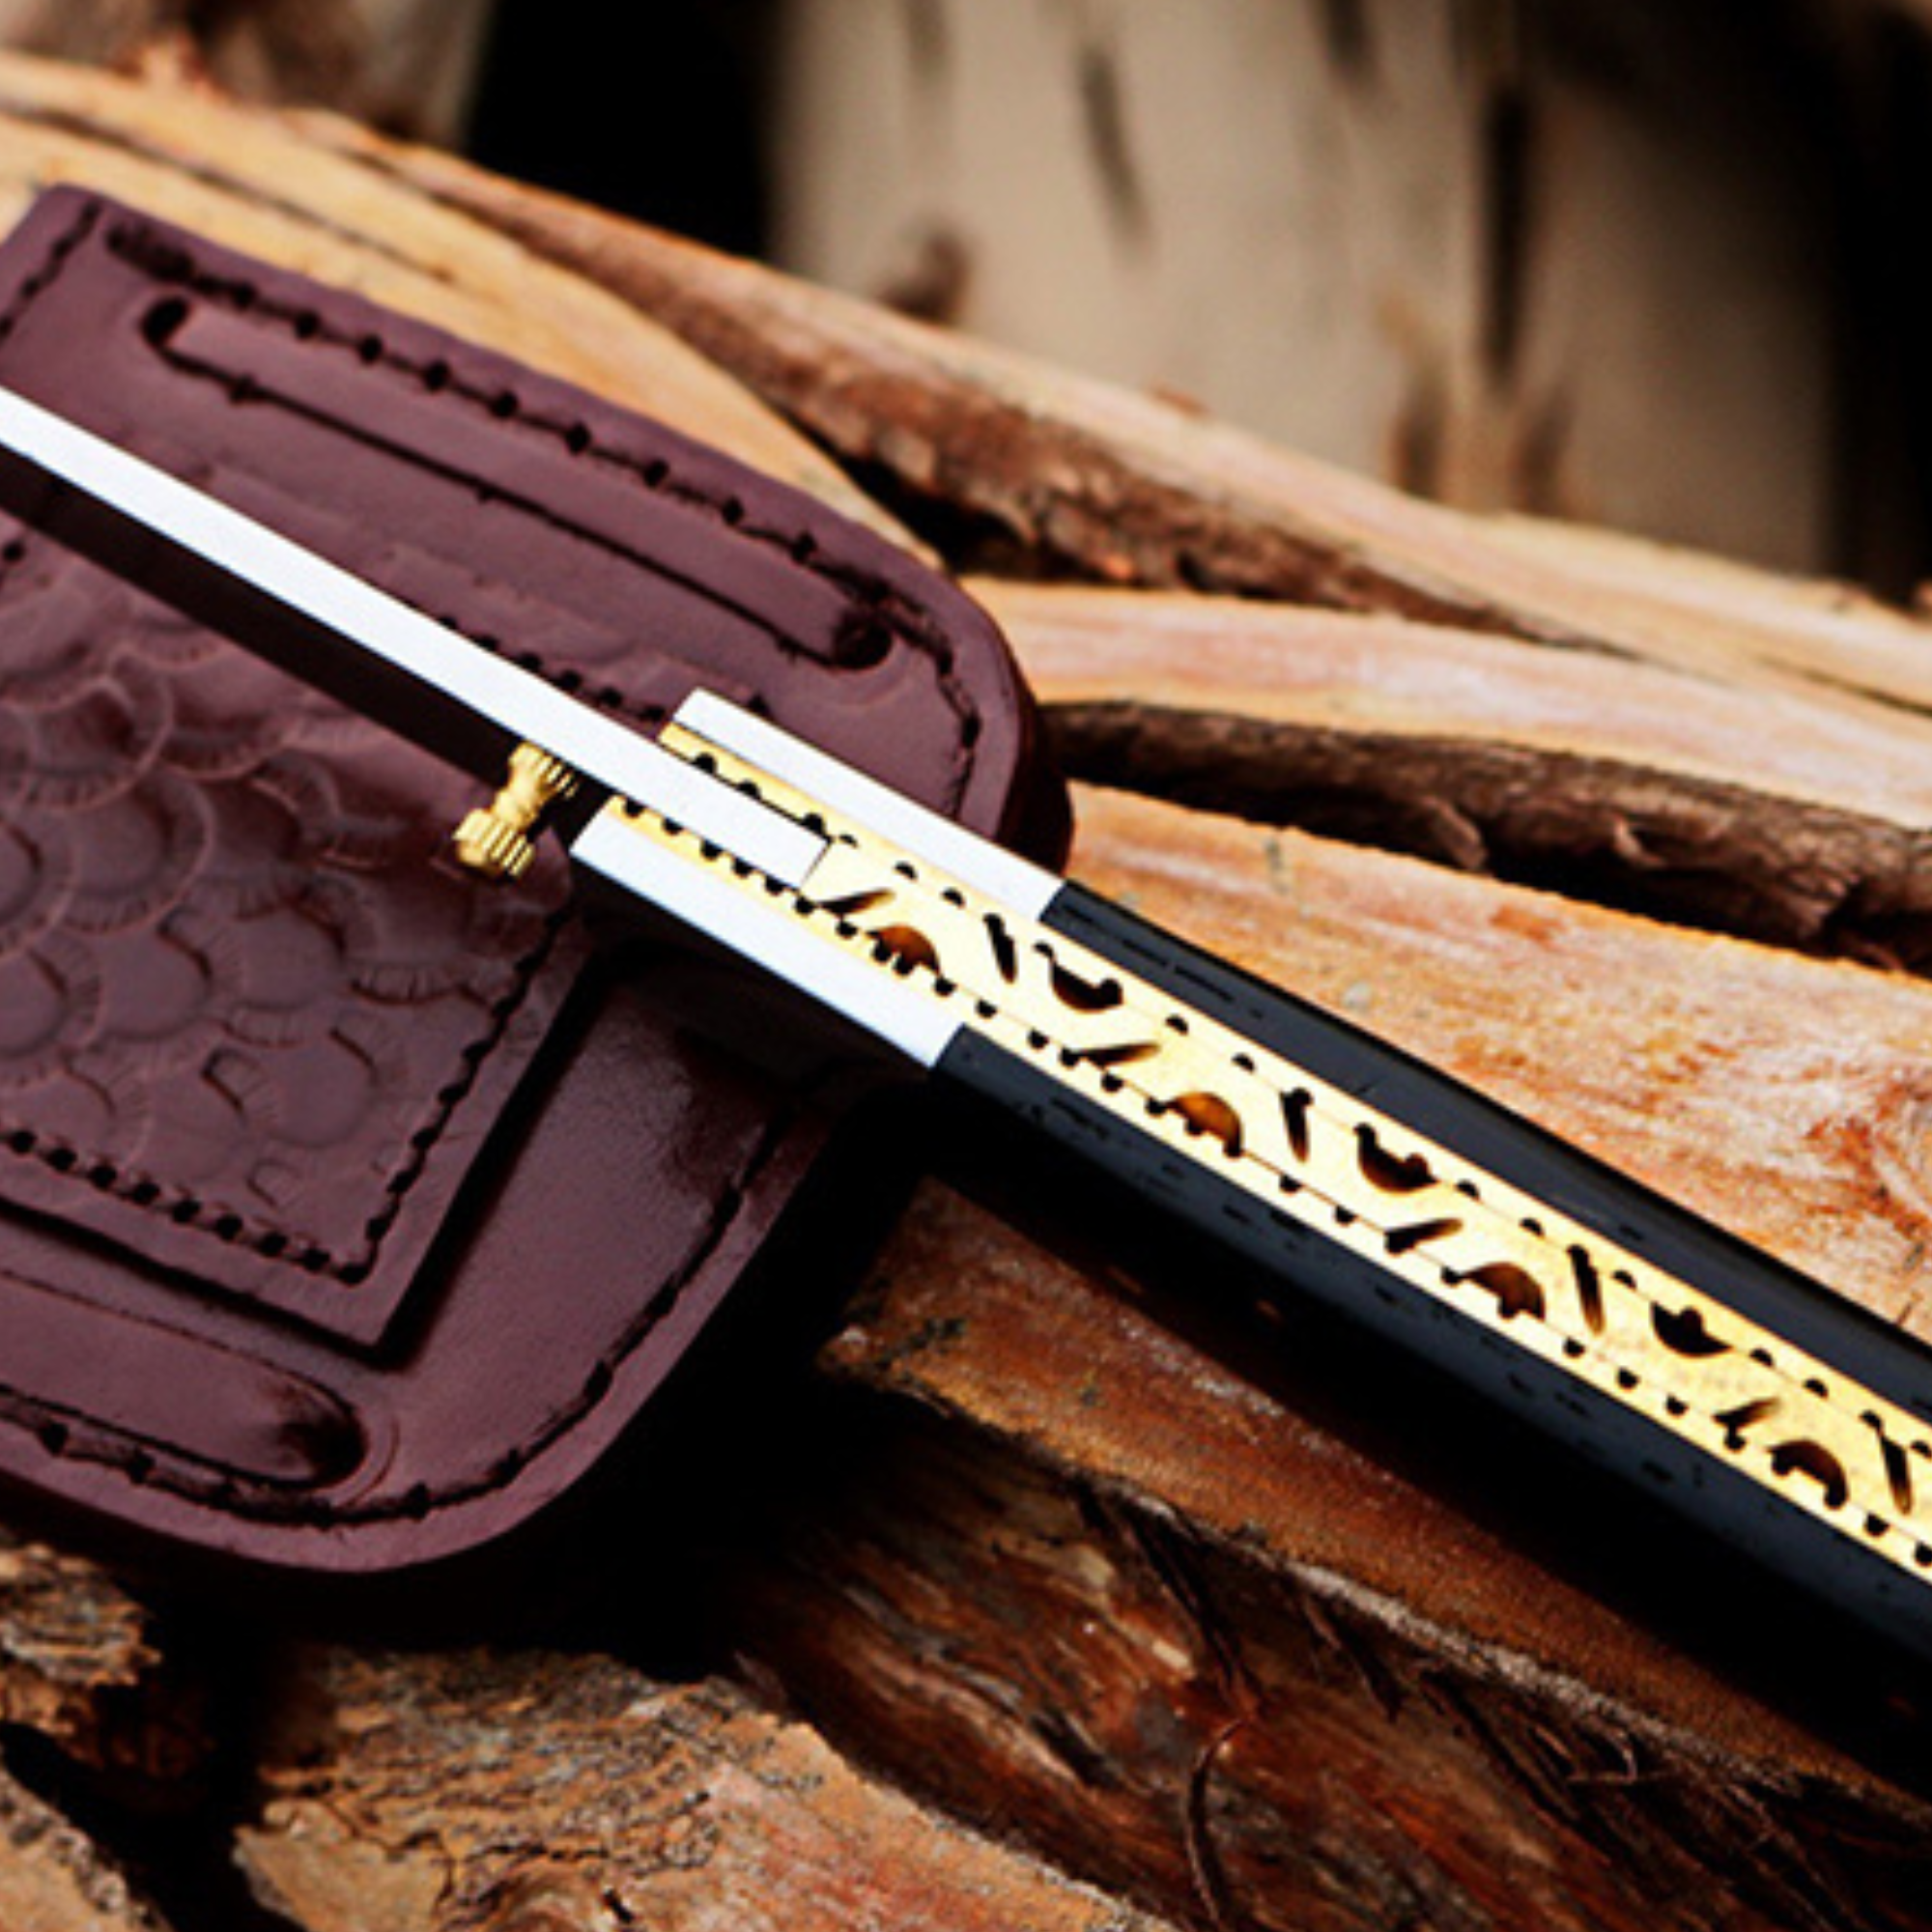 Black Scorpion 8? Long 4?Blade? 6oz 440c High Mirror Polished Pocket knives Handmade Damascus Pocket Folding Knife Handmade Word Class knives